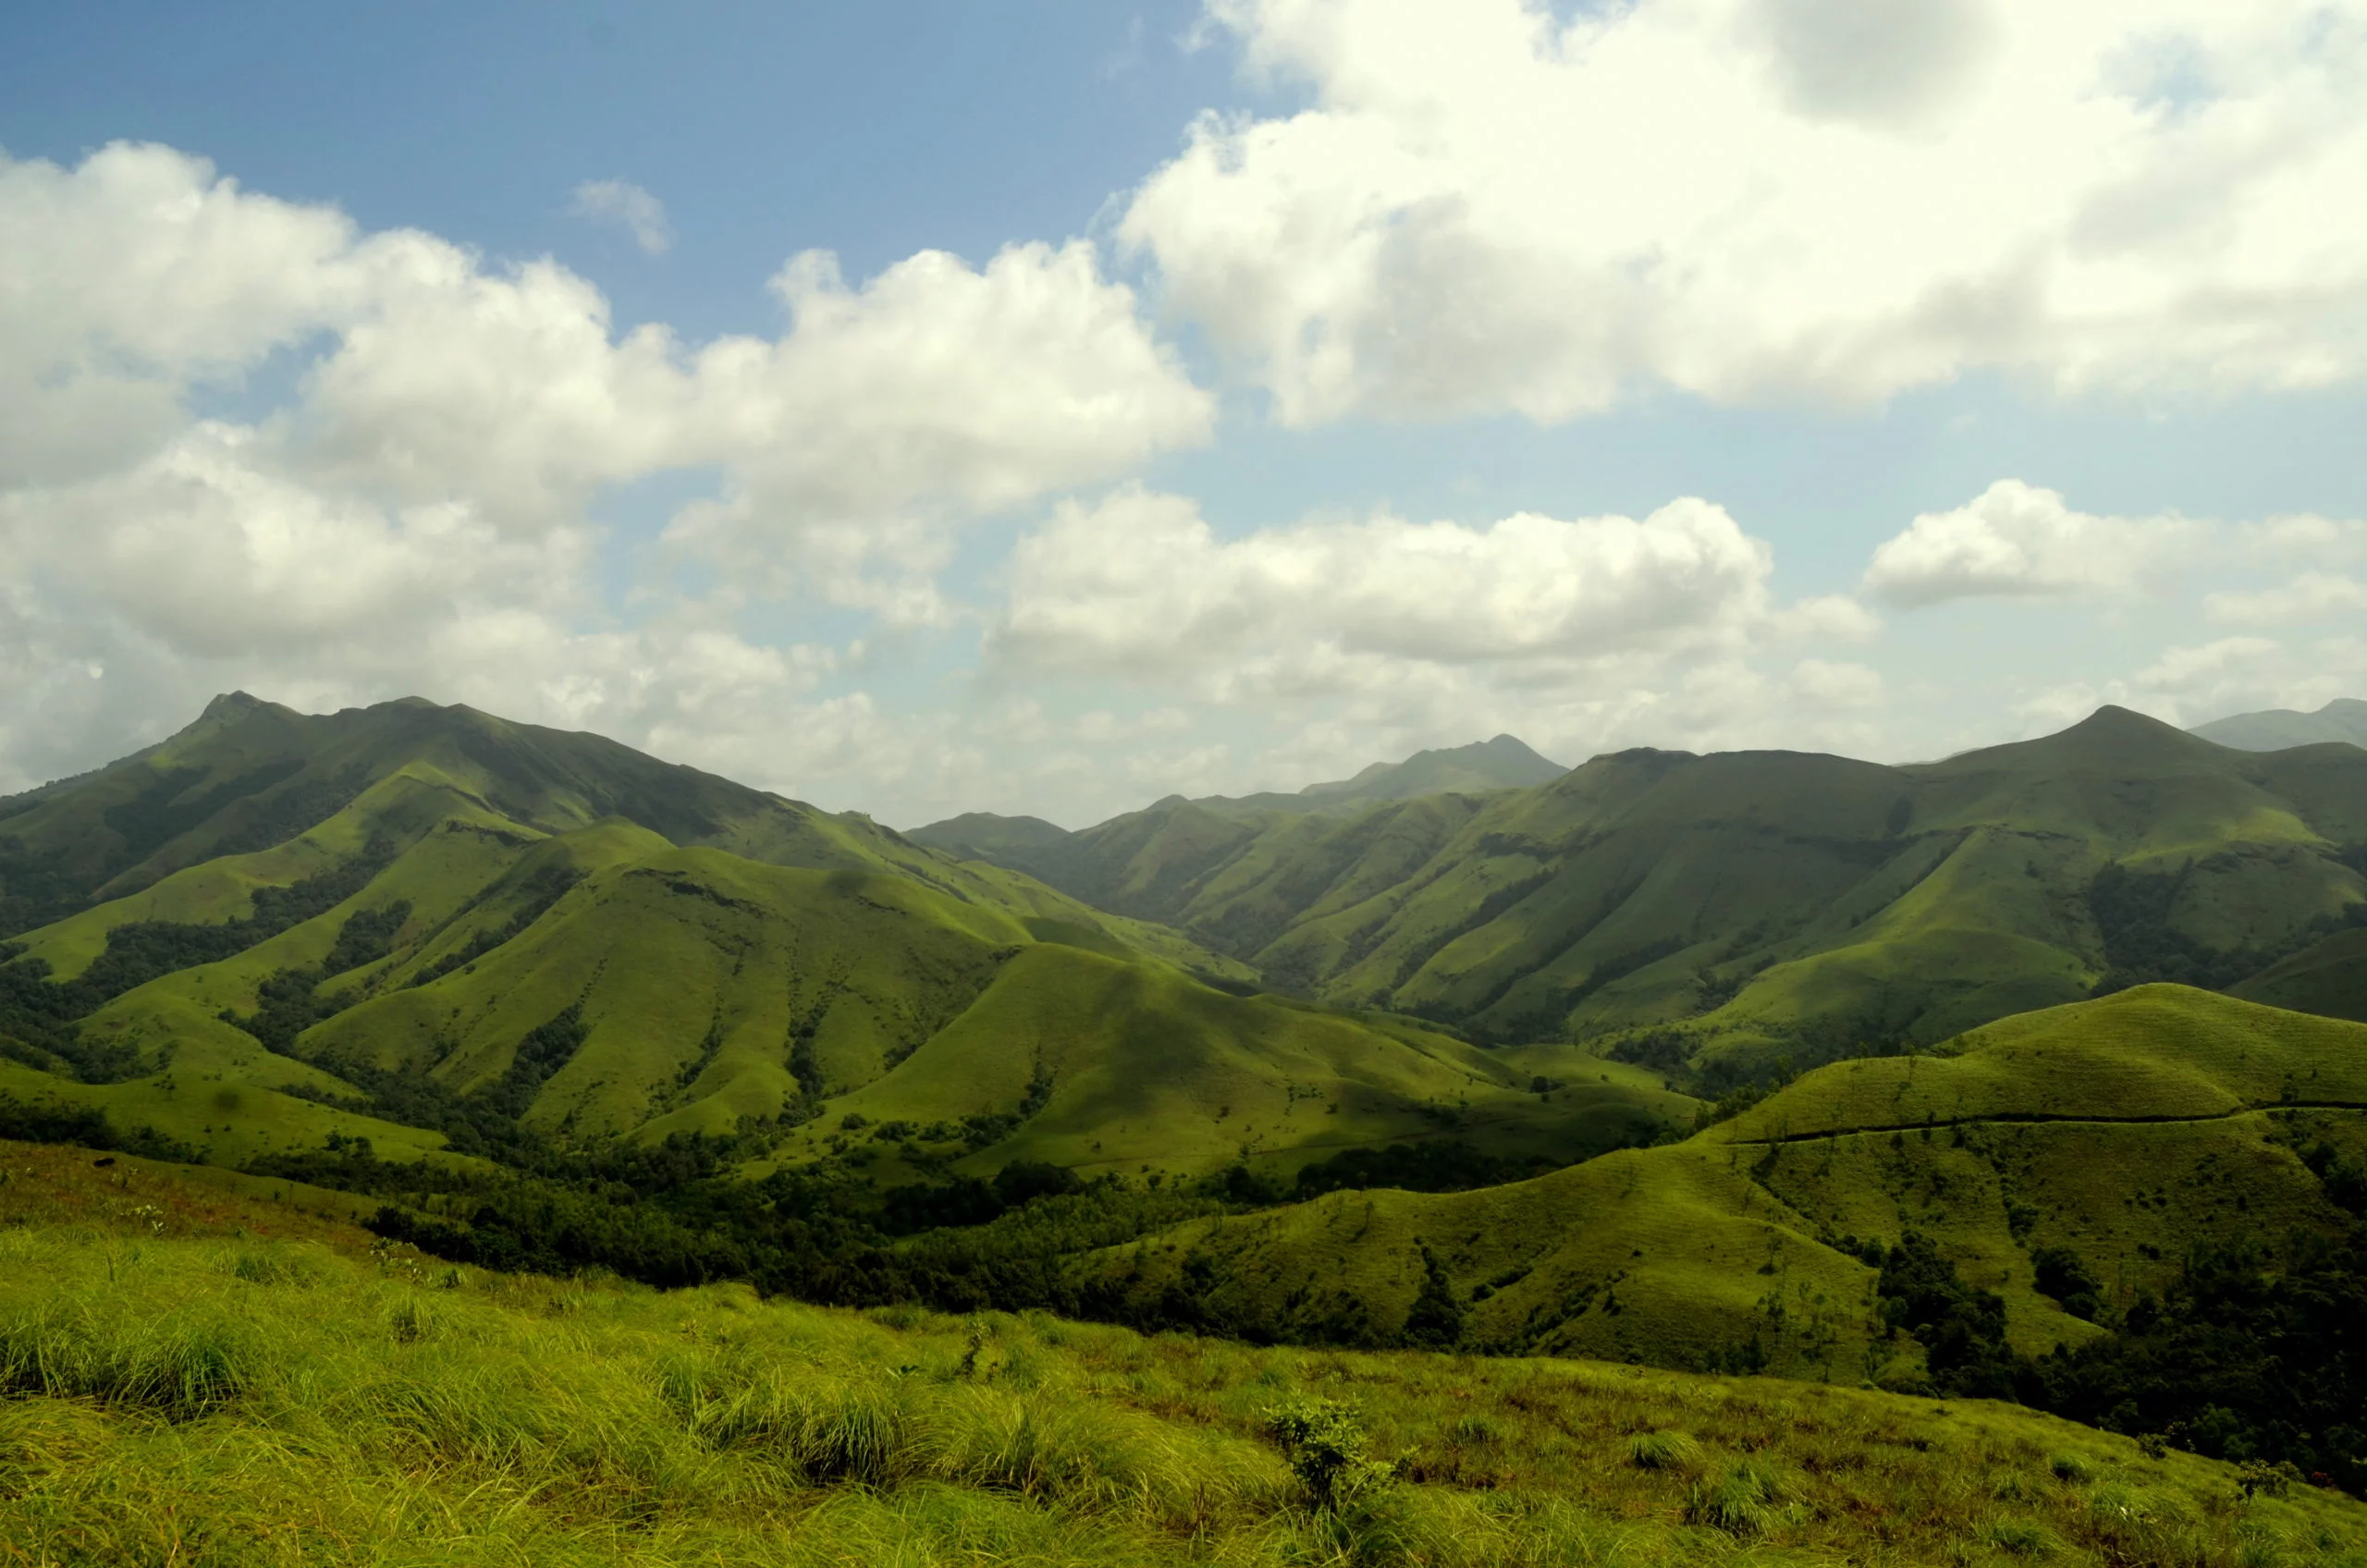 Green mountains in the area near Pandita Ramabai's birthplace